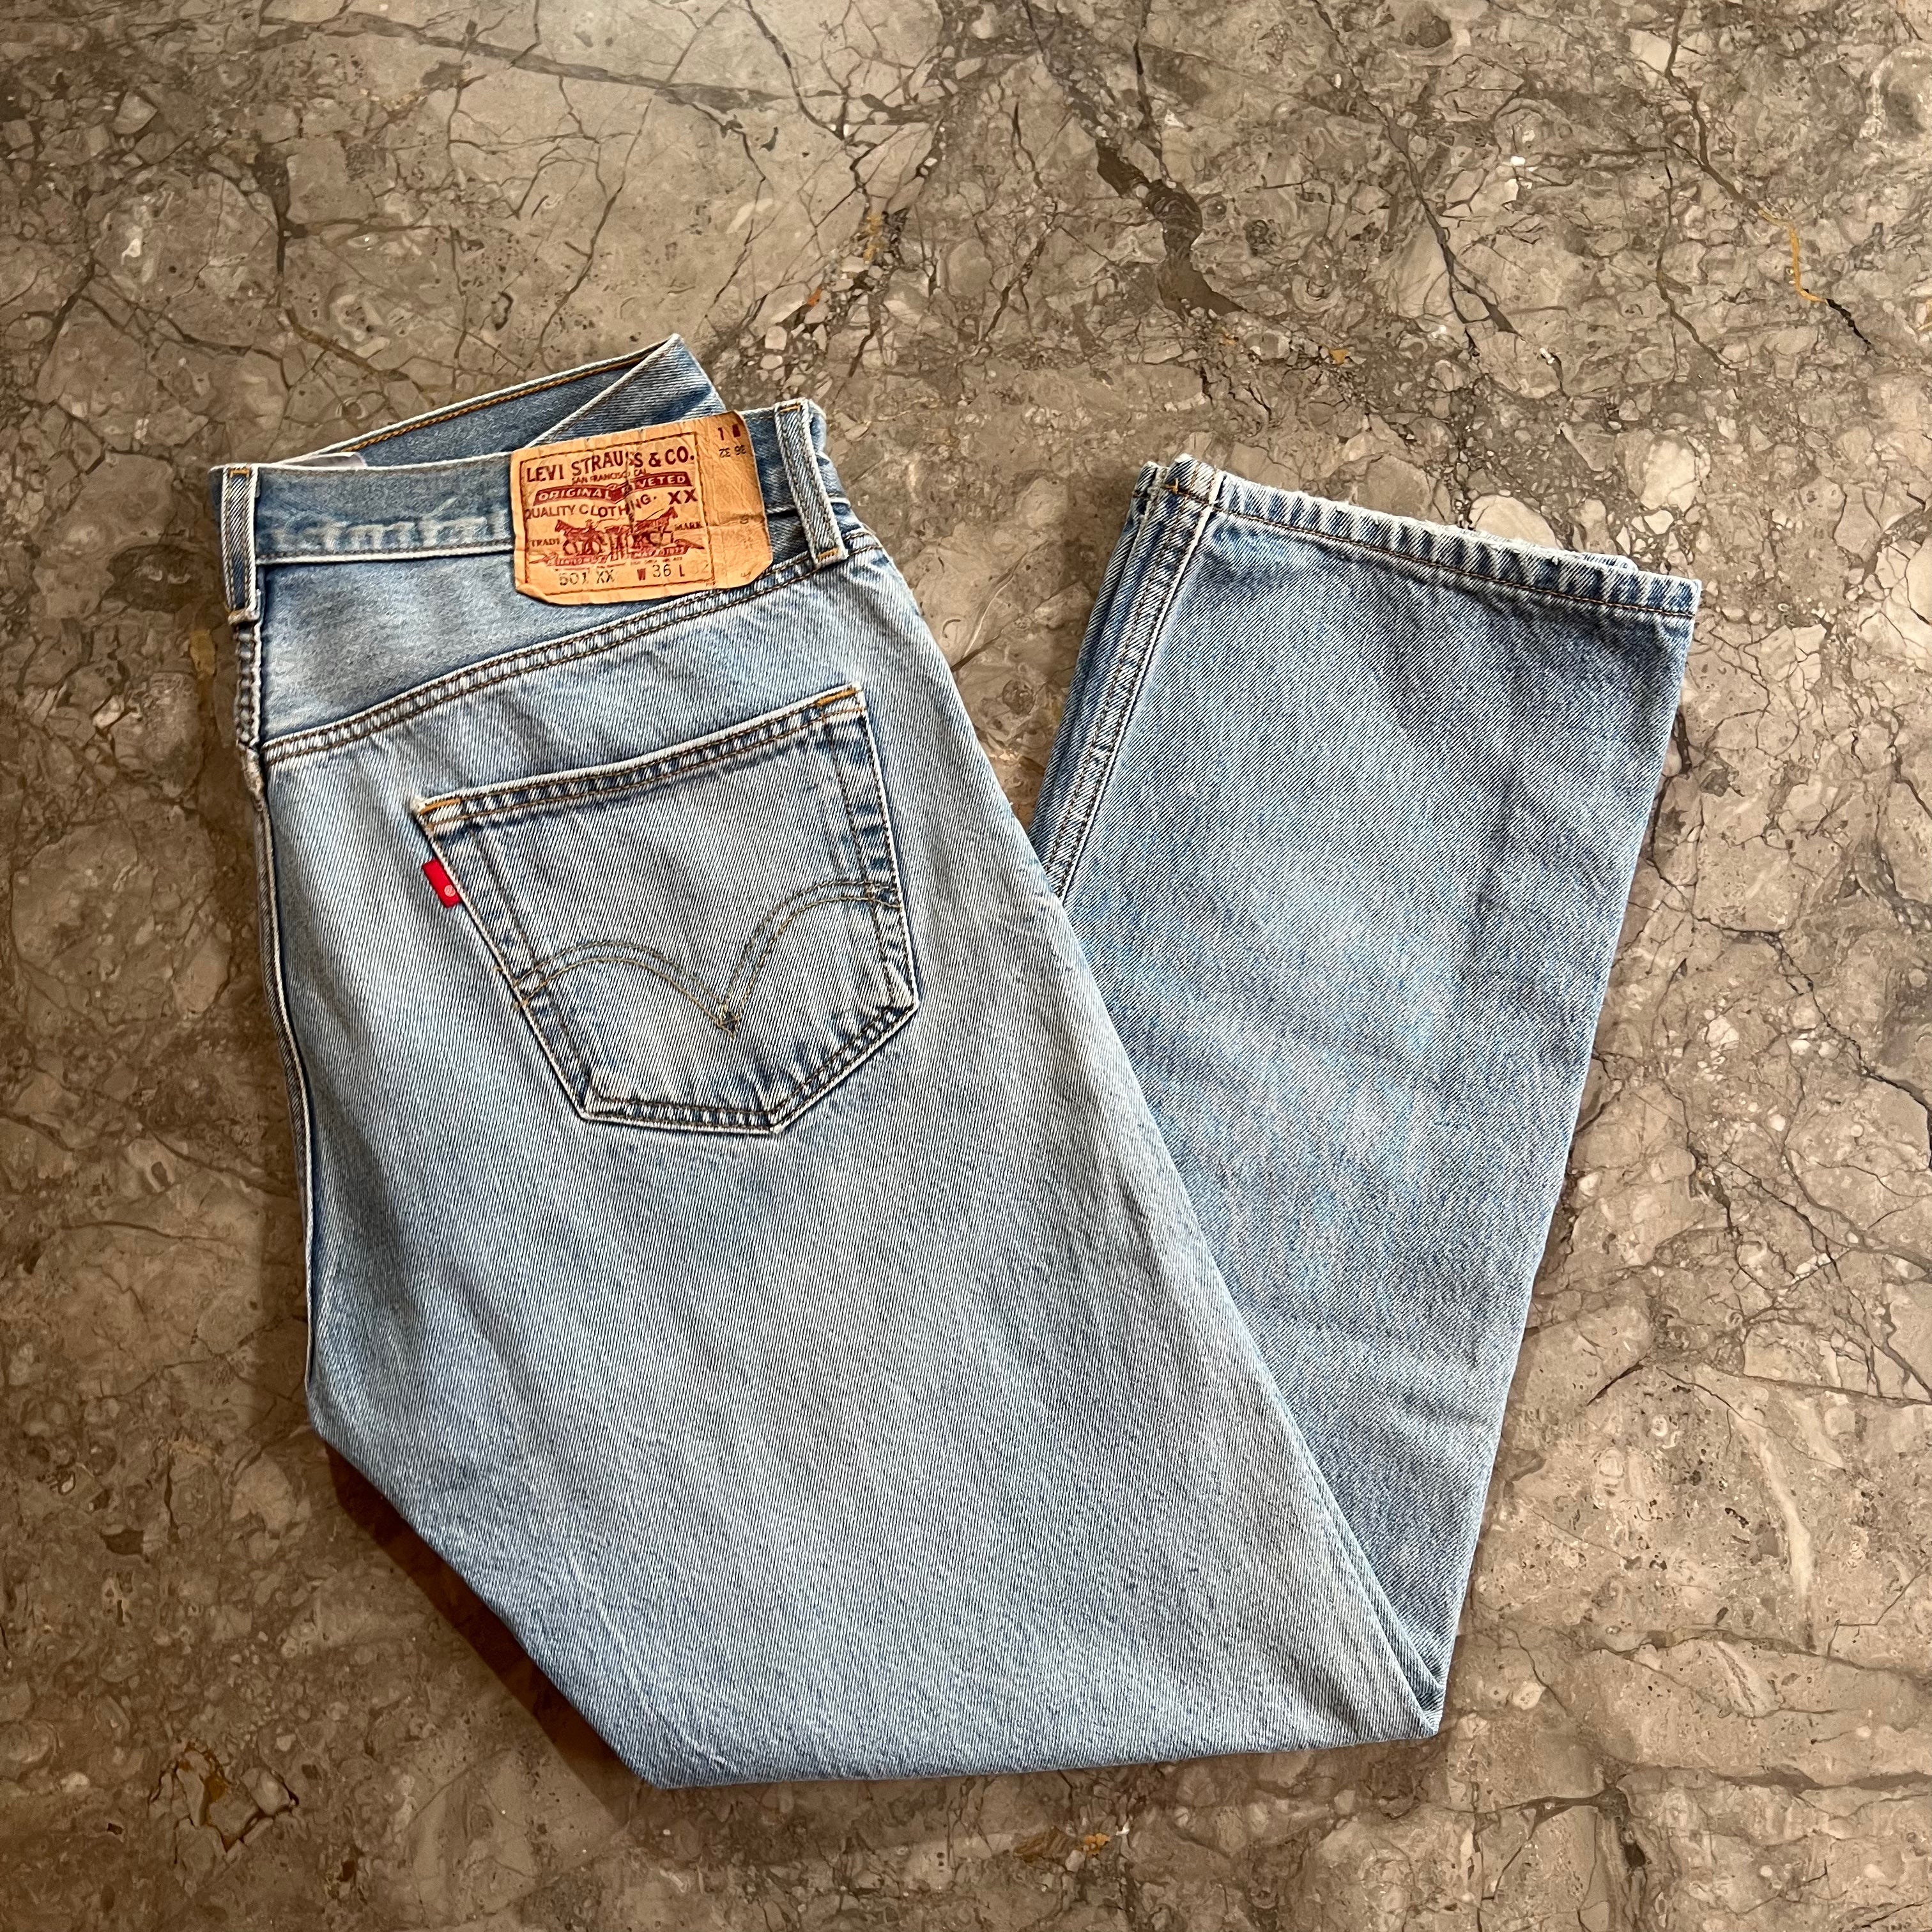 Levis-jeans (storlek 36/34)